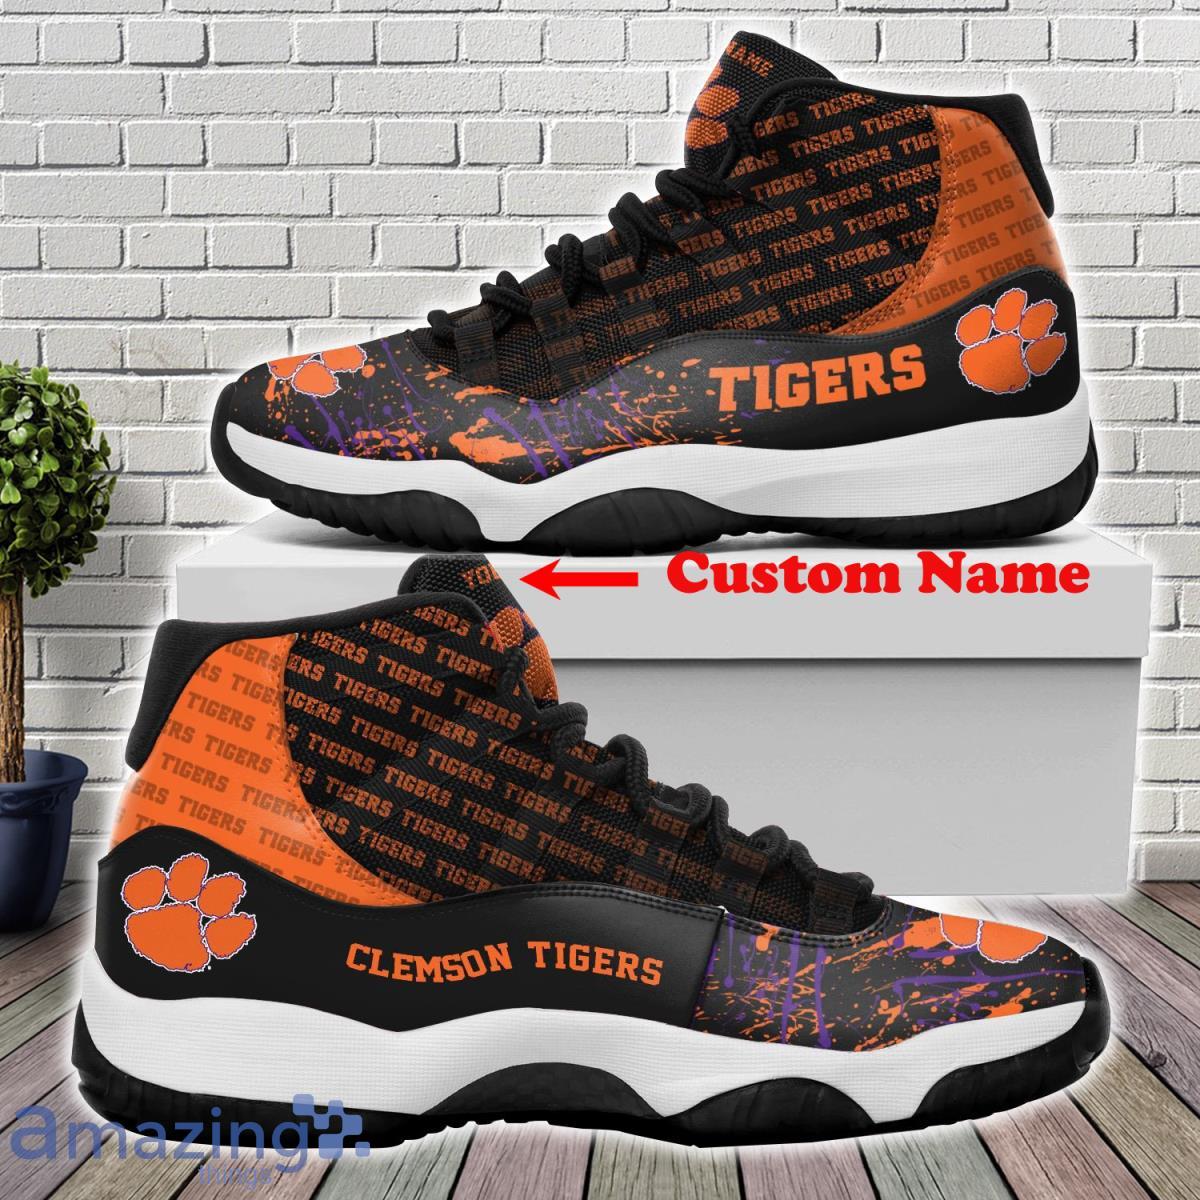 Clemson Tigers Football Team Air Jordan 11 Custom Name Sneakers For Fans Product Photo 1